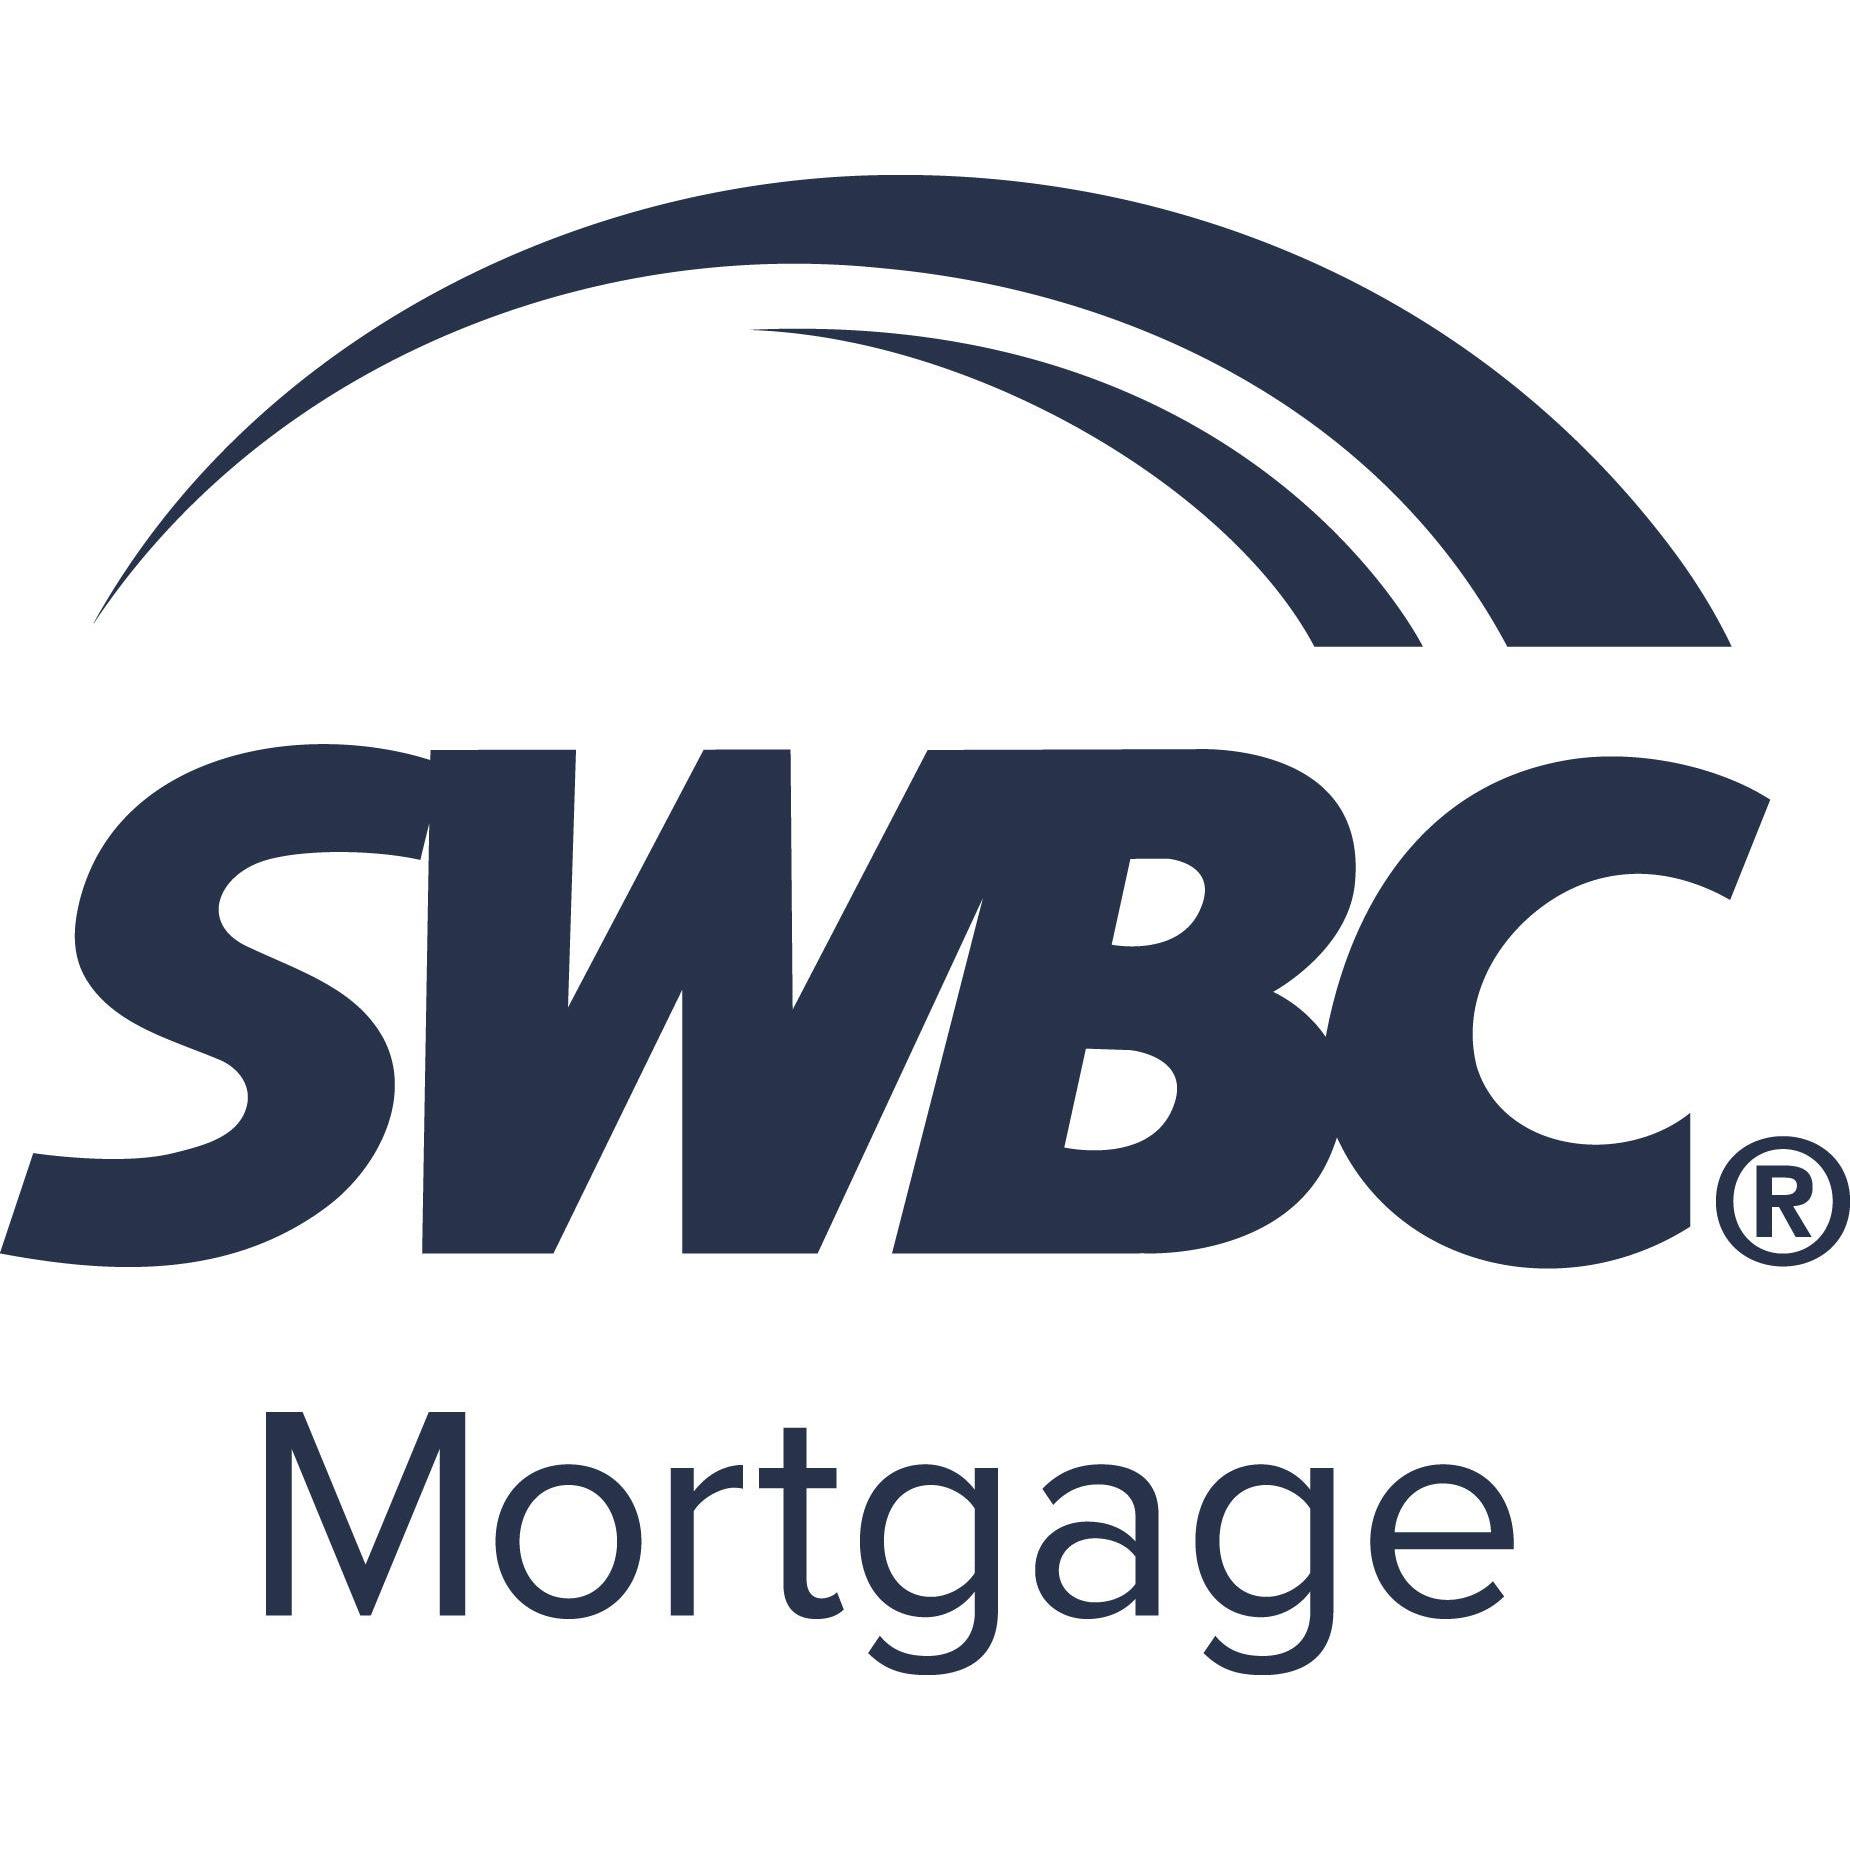 John Snider, SWBC Mortgage - Woodway, TX 76712 - (254)741-9440 | ShowMeLocal.com